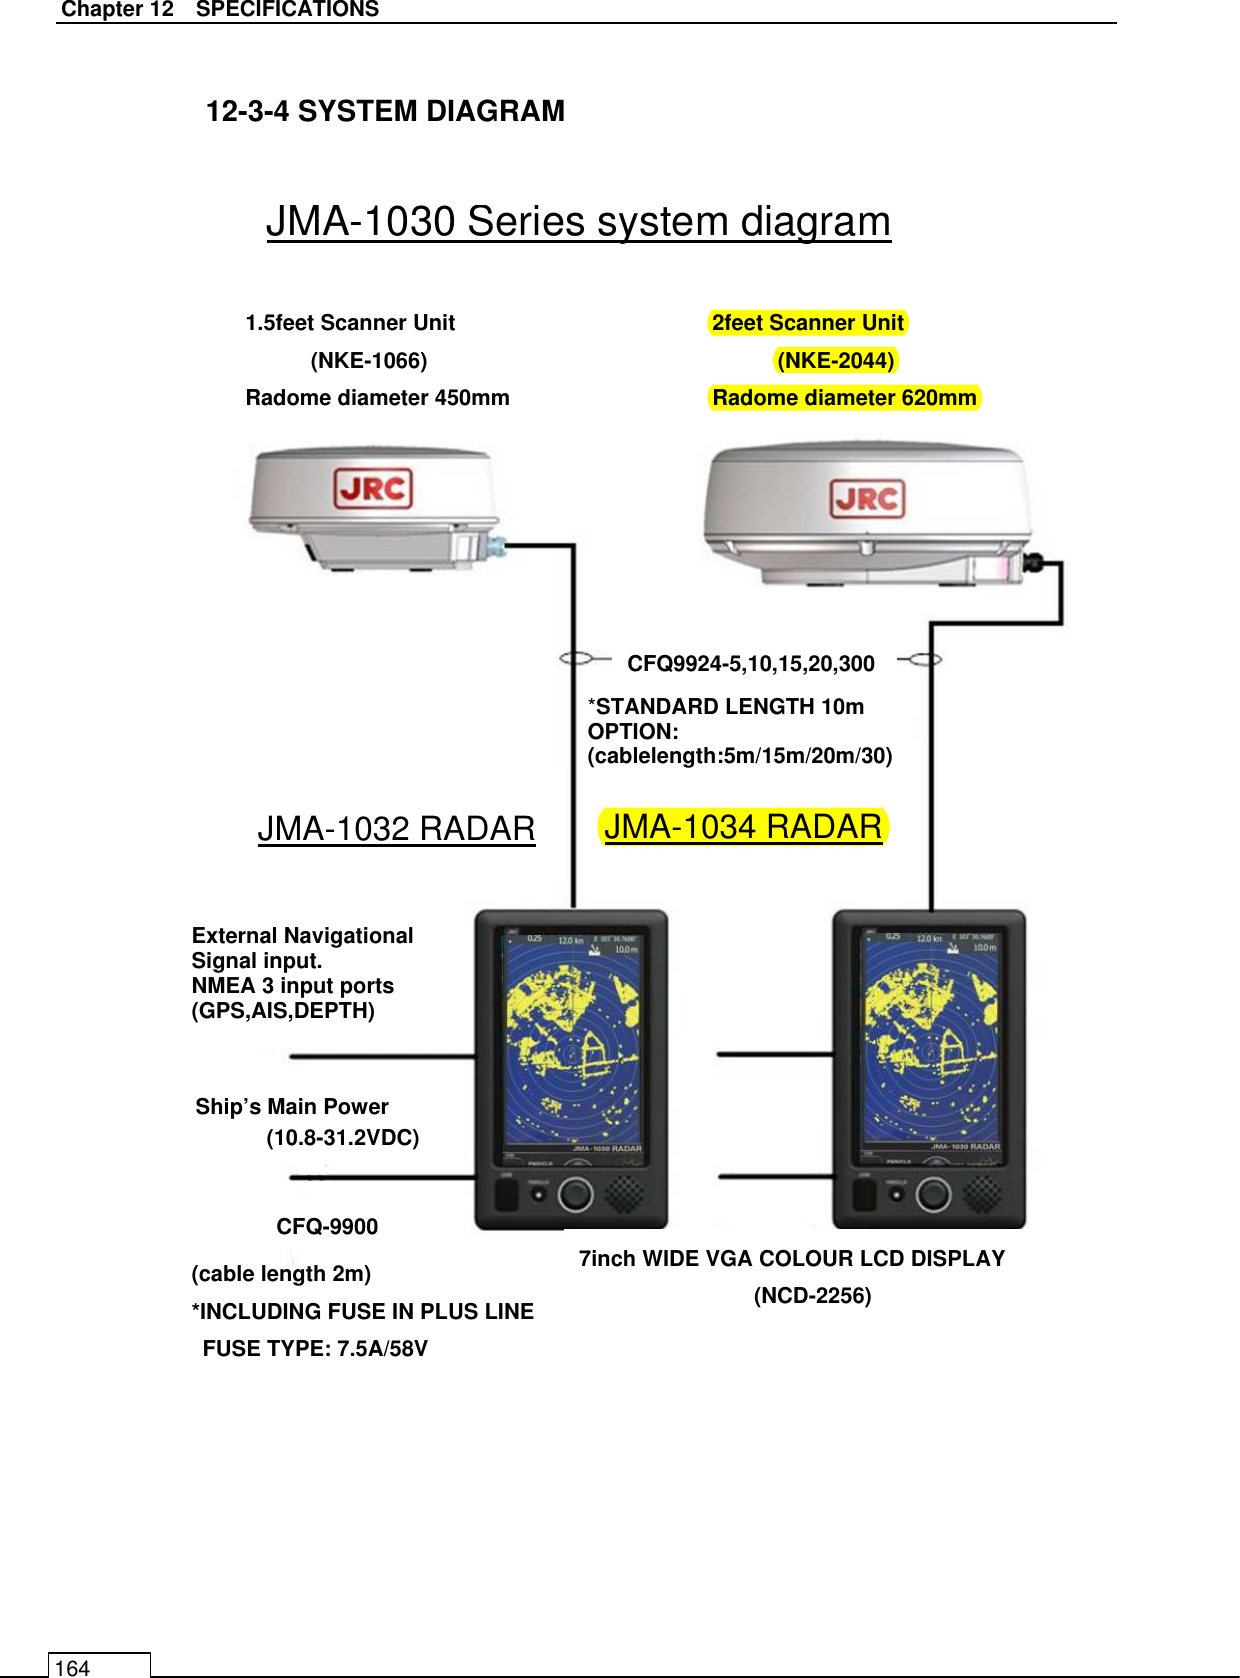   Chapter 12    SPECIFICATIONS 164  12-3-4 SYSTEM DIAGRAM                                         JMA-1030 Series system diagram 1.5feet Scanner Unit (NKE-1066) Radome diameter 450mm 2feet Scanner Unit (NKE-2044) Radome diameter 620mm *STANDARD LENGTH 10m OPTION: (cablelength:5m/15m/20m/30)   JMA-1034 RADAR  JMA-1032 RADAR 7inch WIDE VGA COLOUR LCD DISPLAY (NCD-2256) CFQ9924-5,10,15,20,300 External Navigational Signal input. NMEA 3 input ports (GPS,AIS,DEPTH) CFQ-9900 Ship’s Main Power (cable length 2m) *INCLUDING FUSE IN PLUS LINE FUSE TYPE: 7.5A/58V (10.8-31.2VDC) 